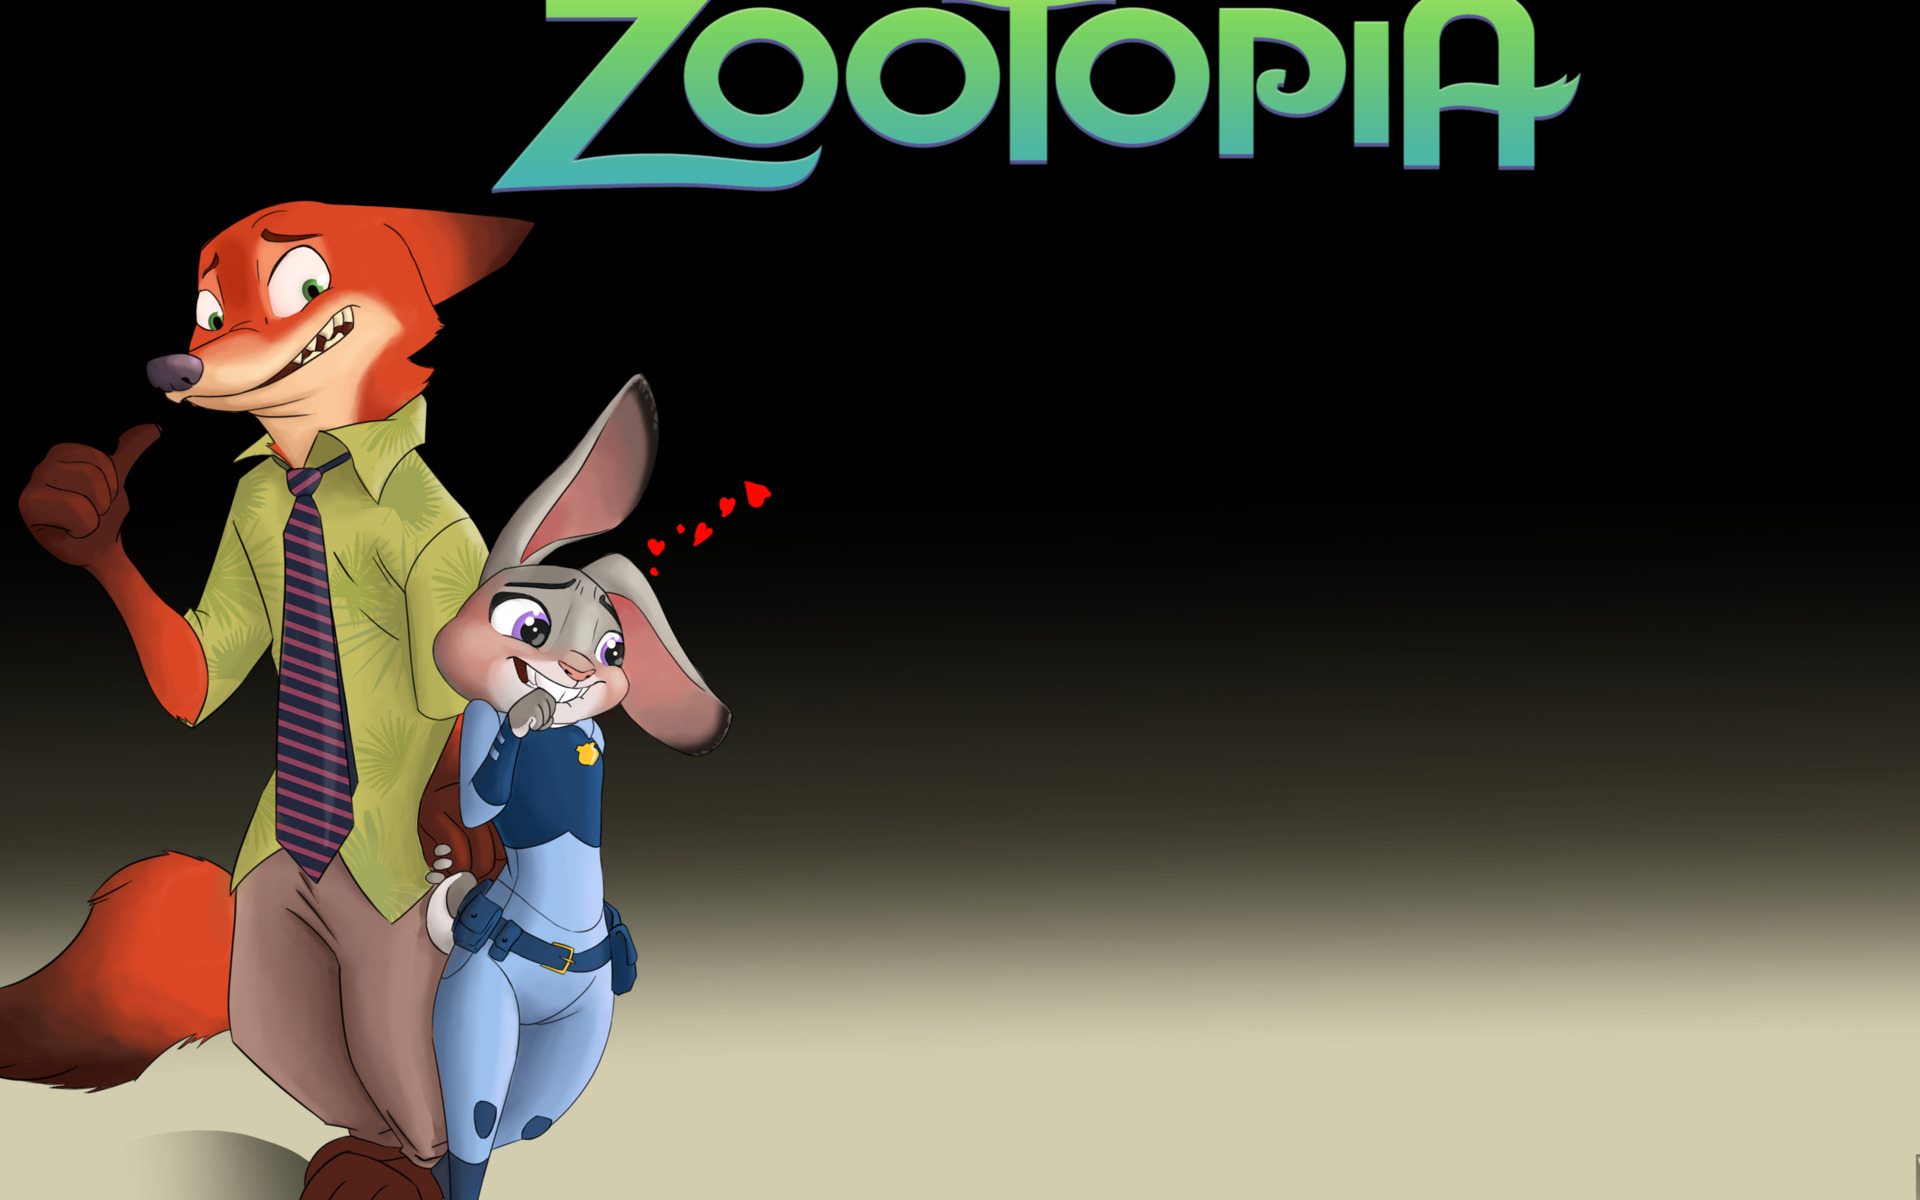 zootopia-movie-poster.jpg